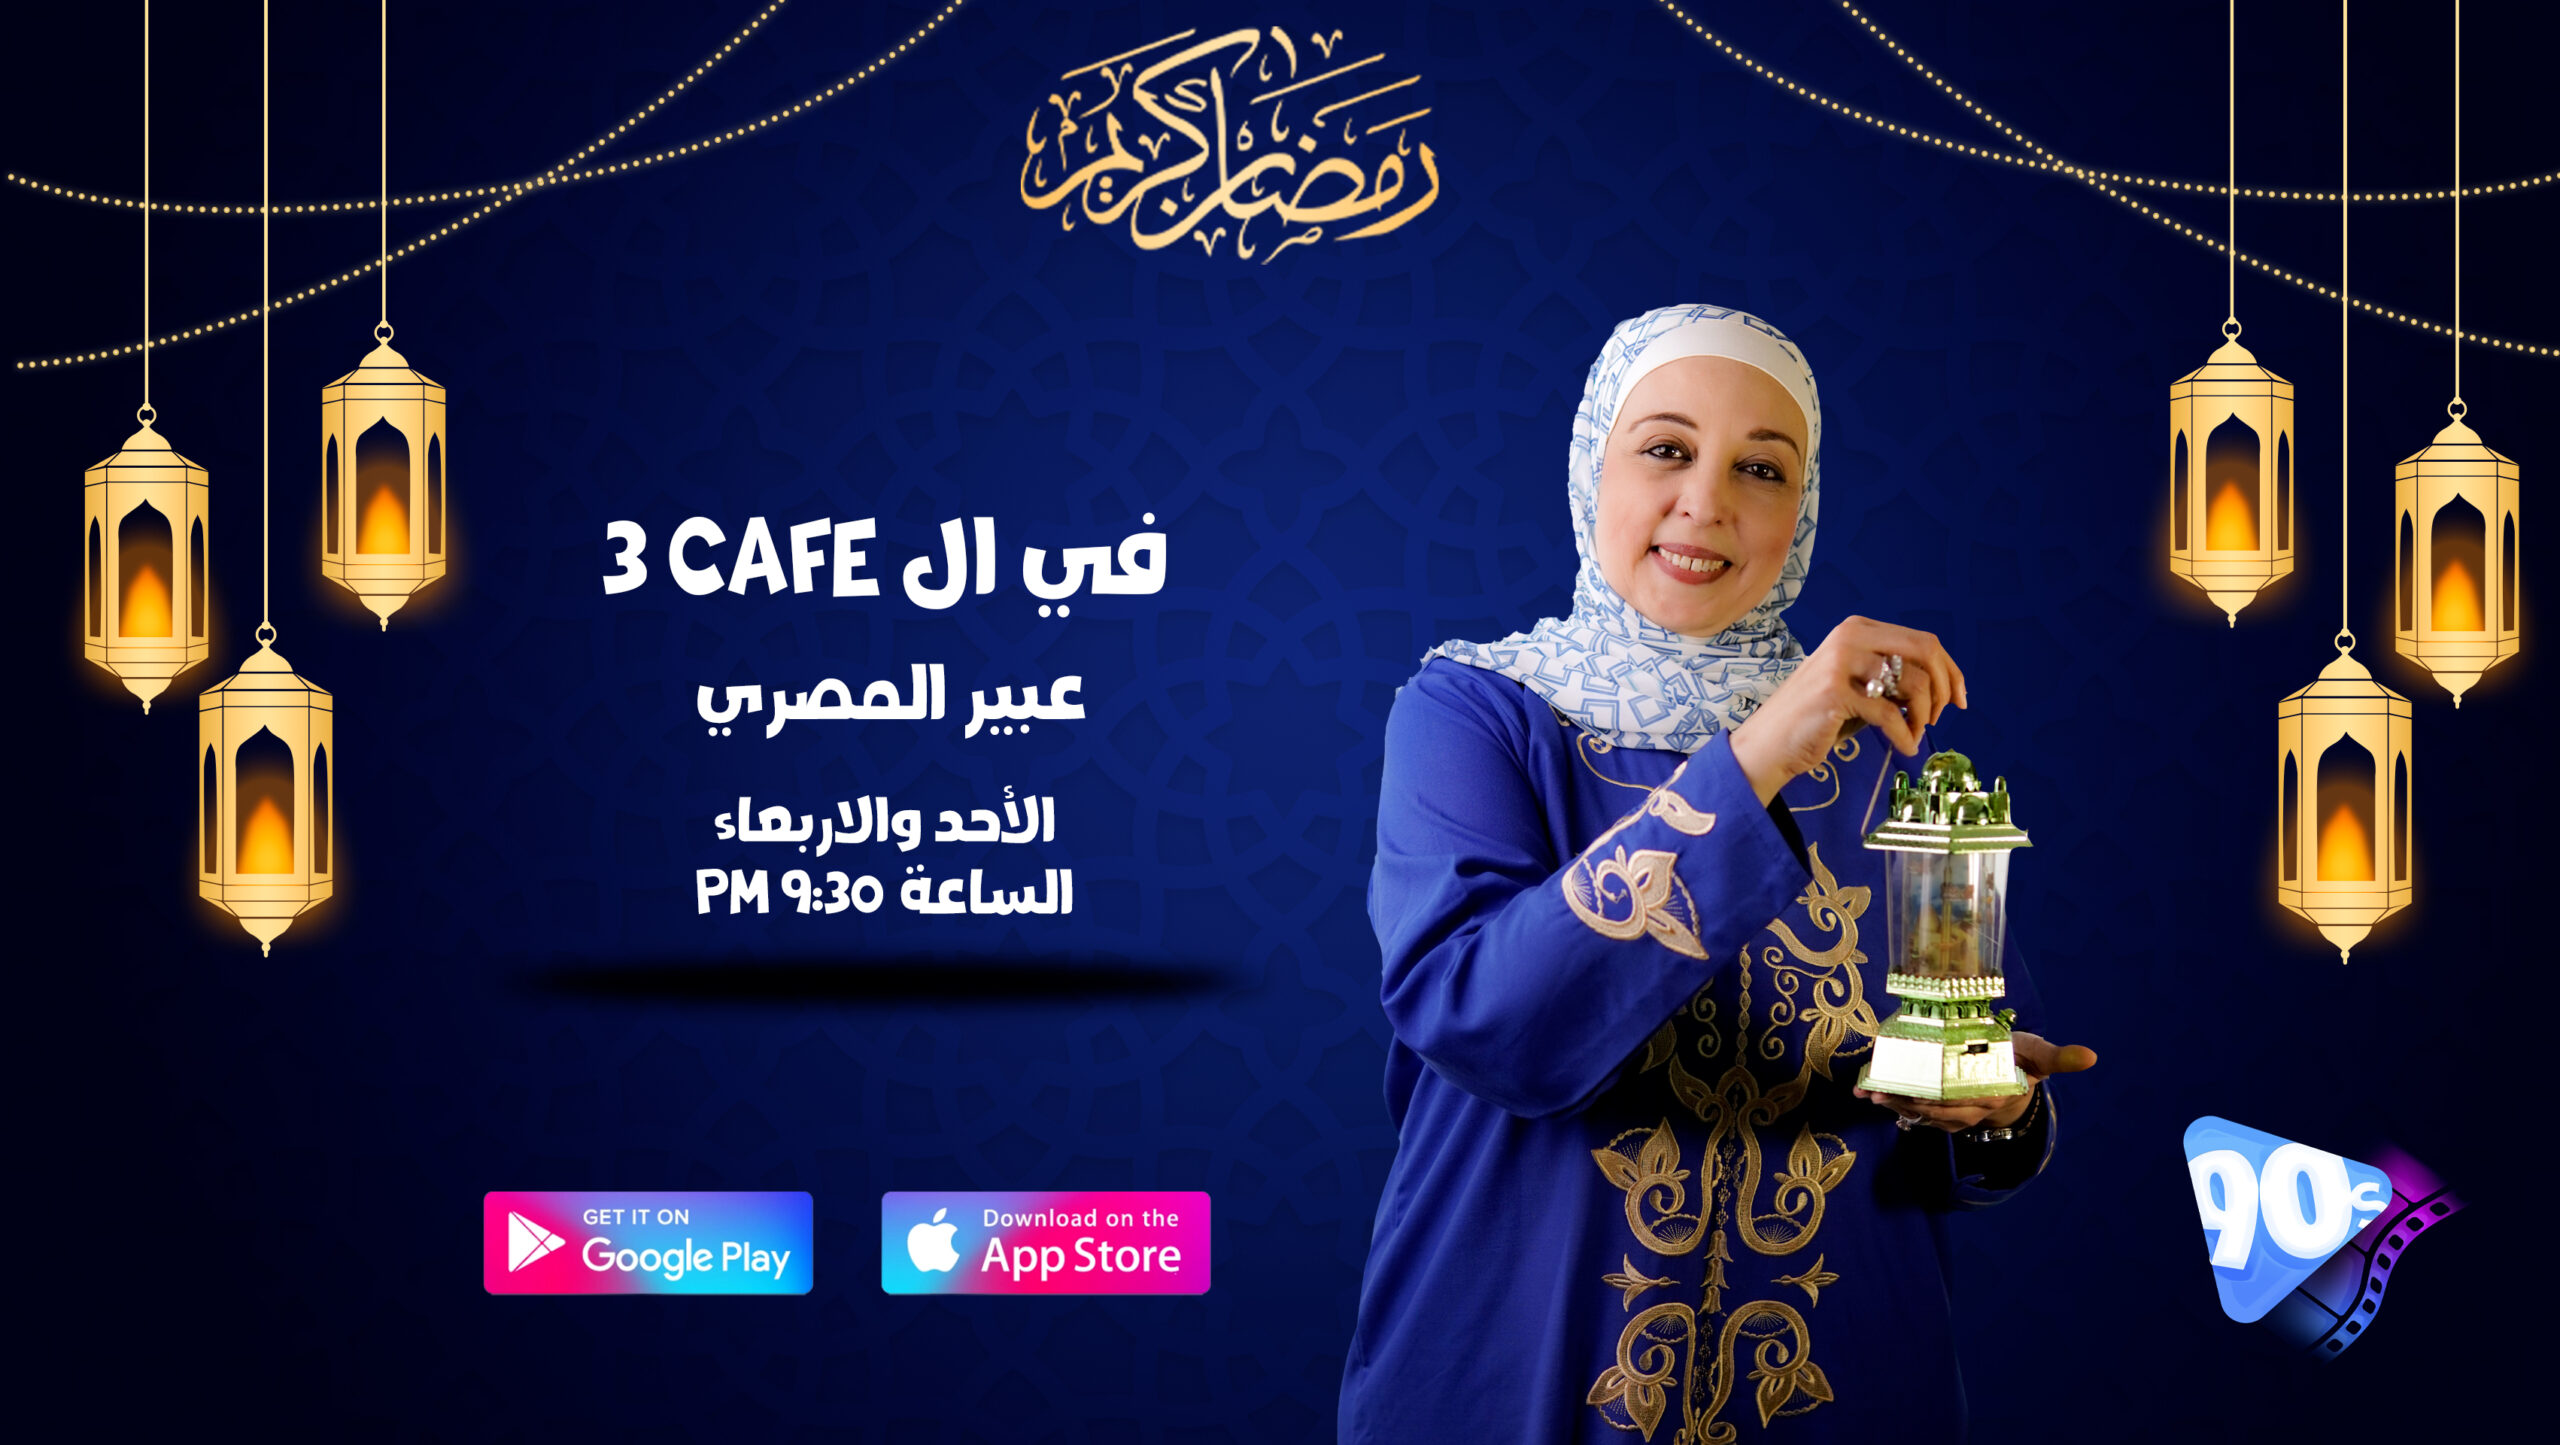 الCafe3 عبير المصري scaled الCafe3 عبير المصري scaled